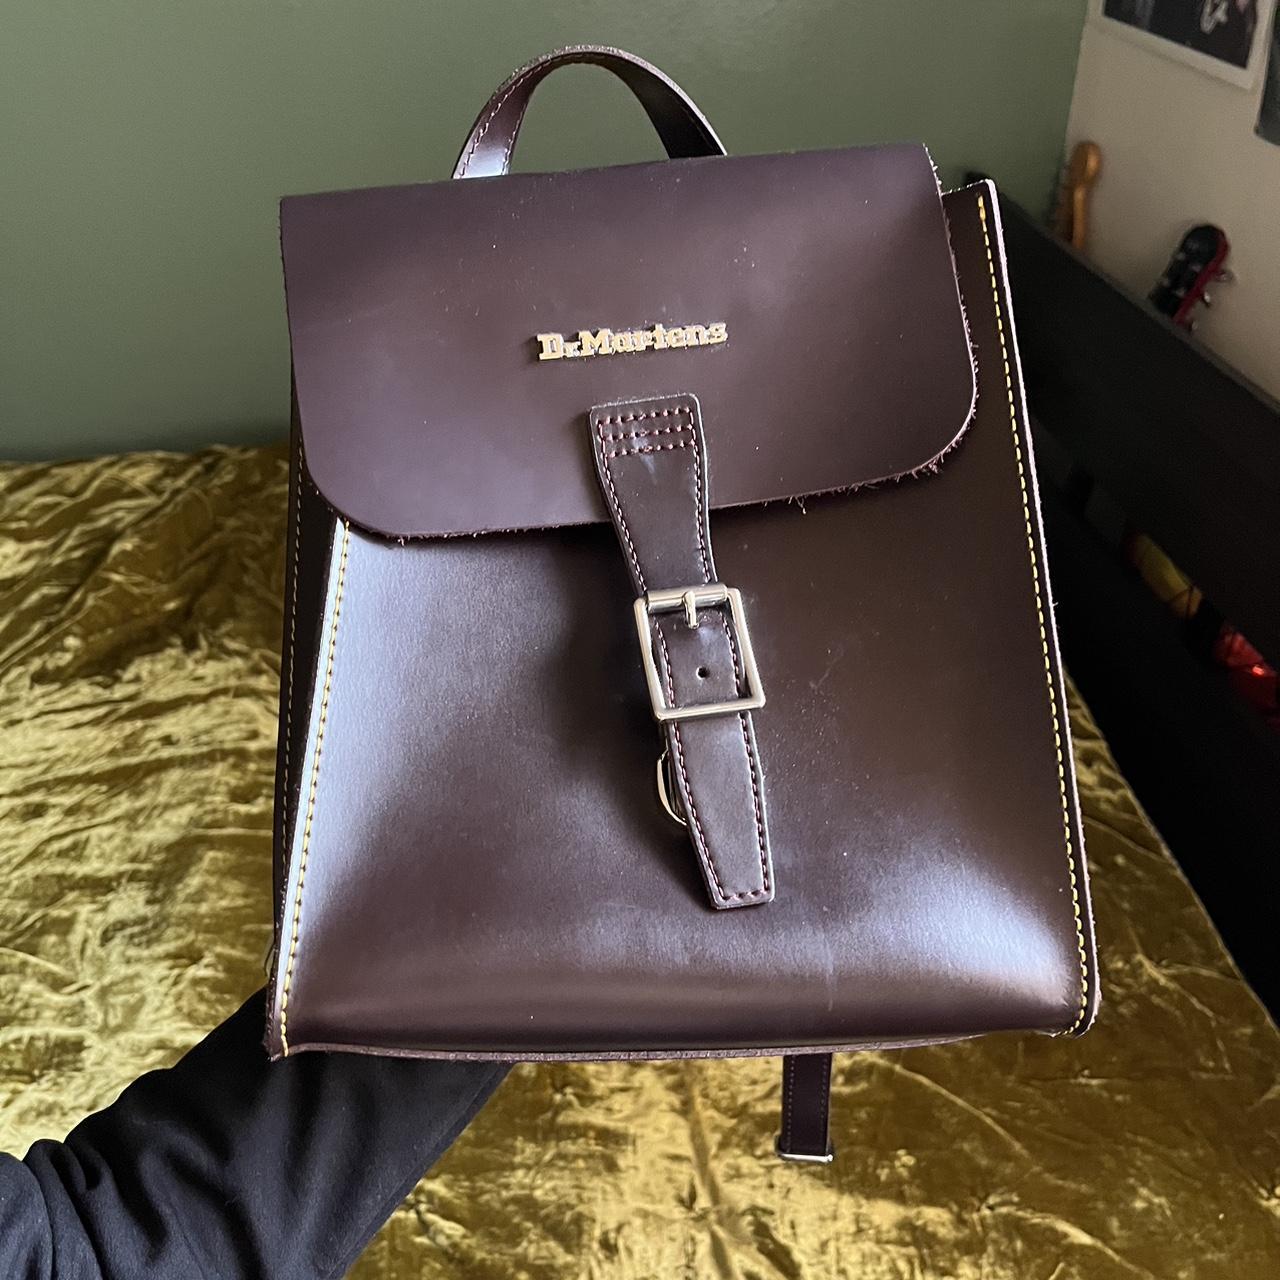 DR MARTENS Leather Mini Backpack